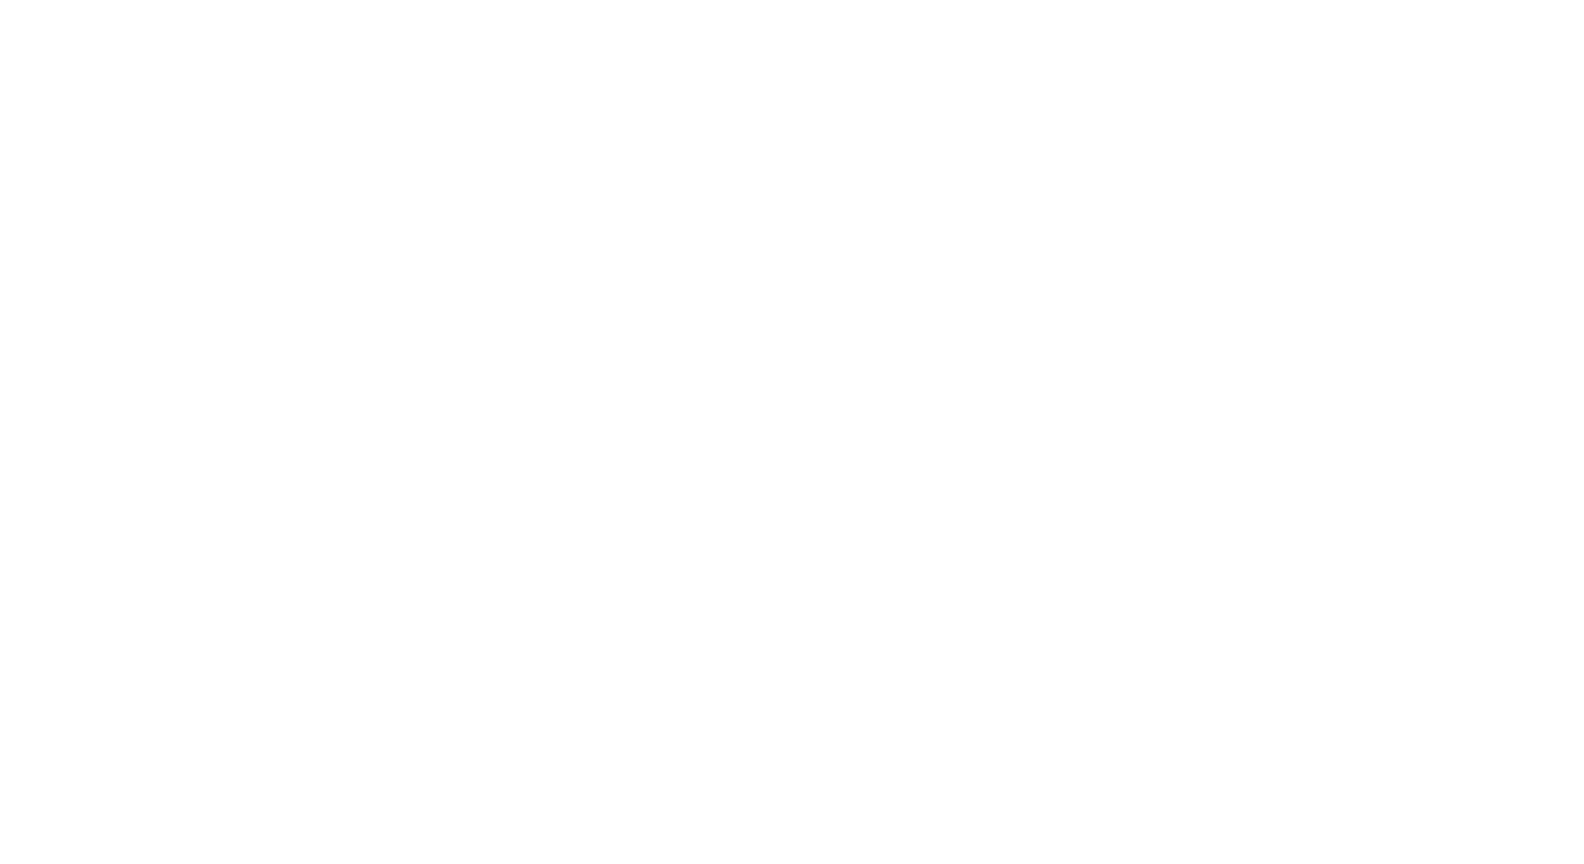 exzizt logo black